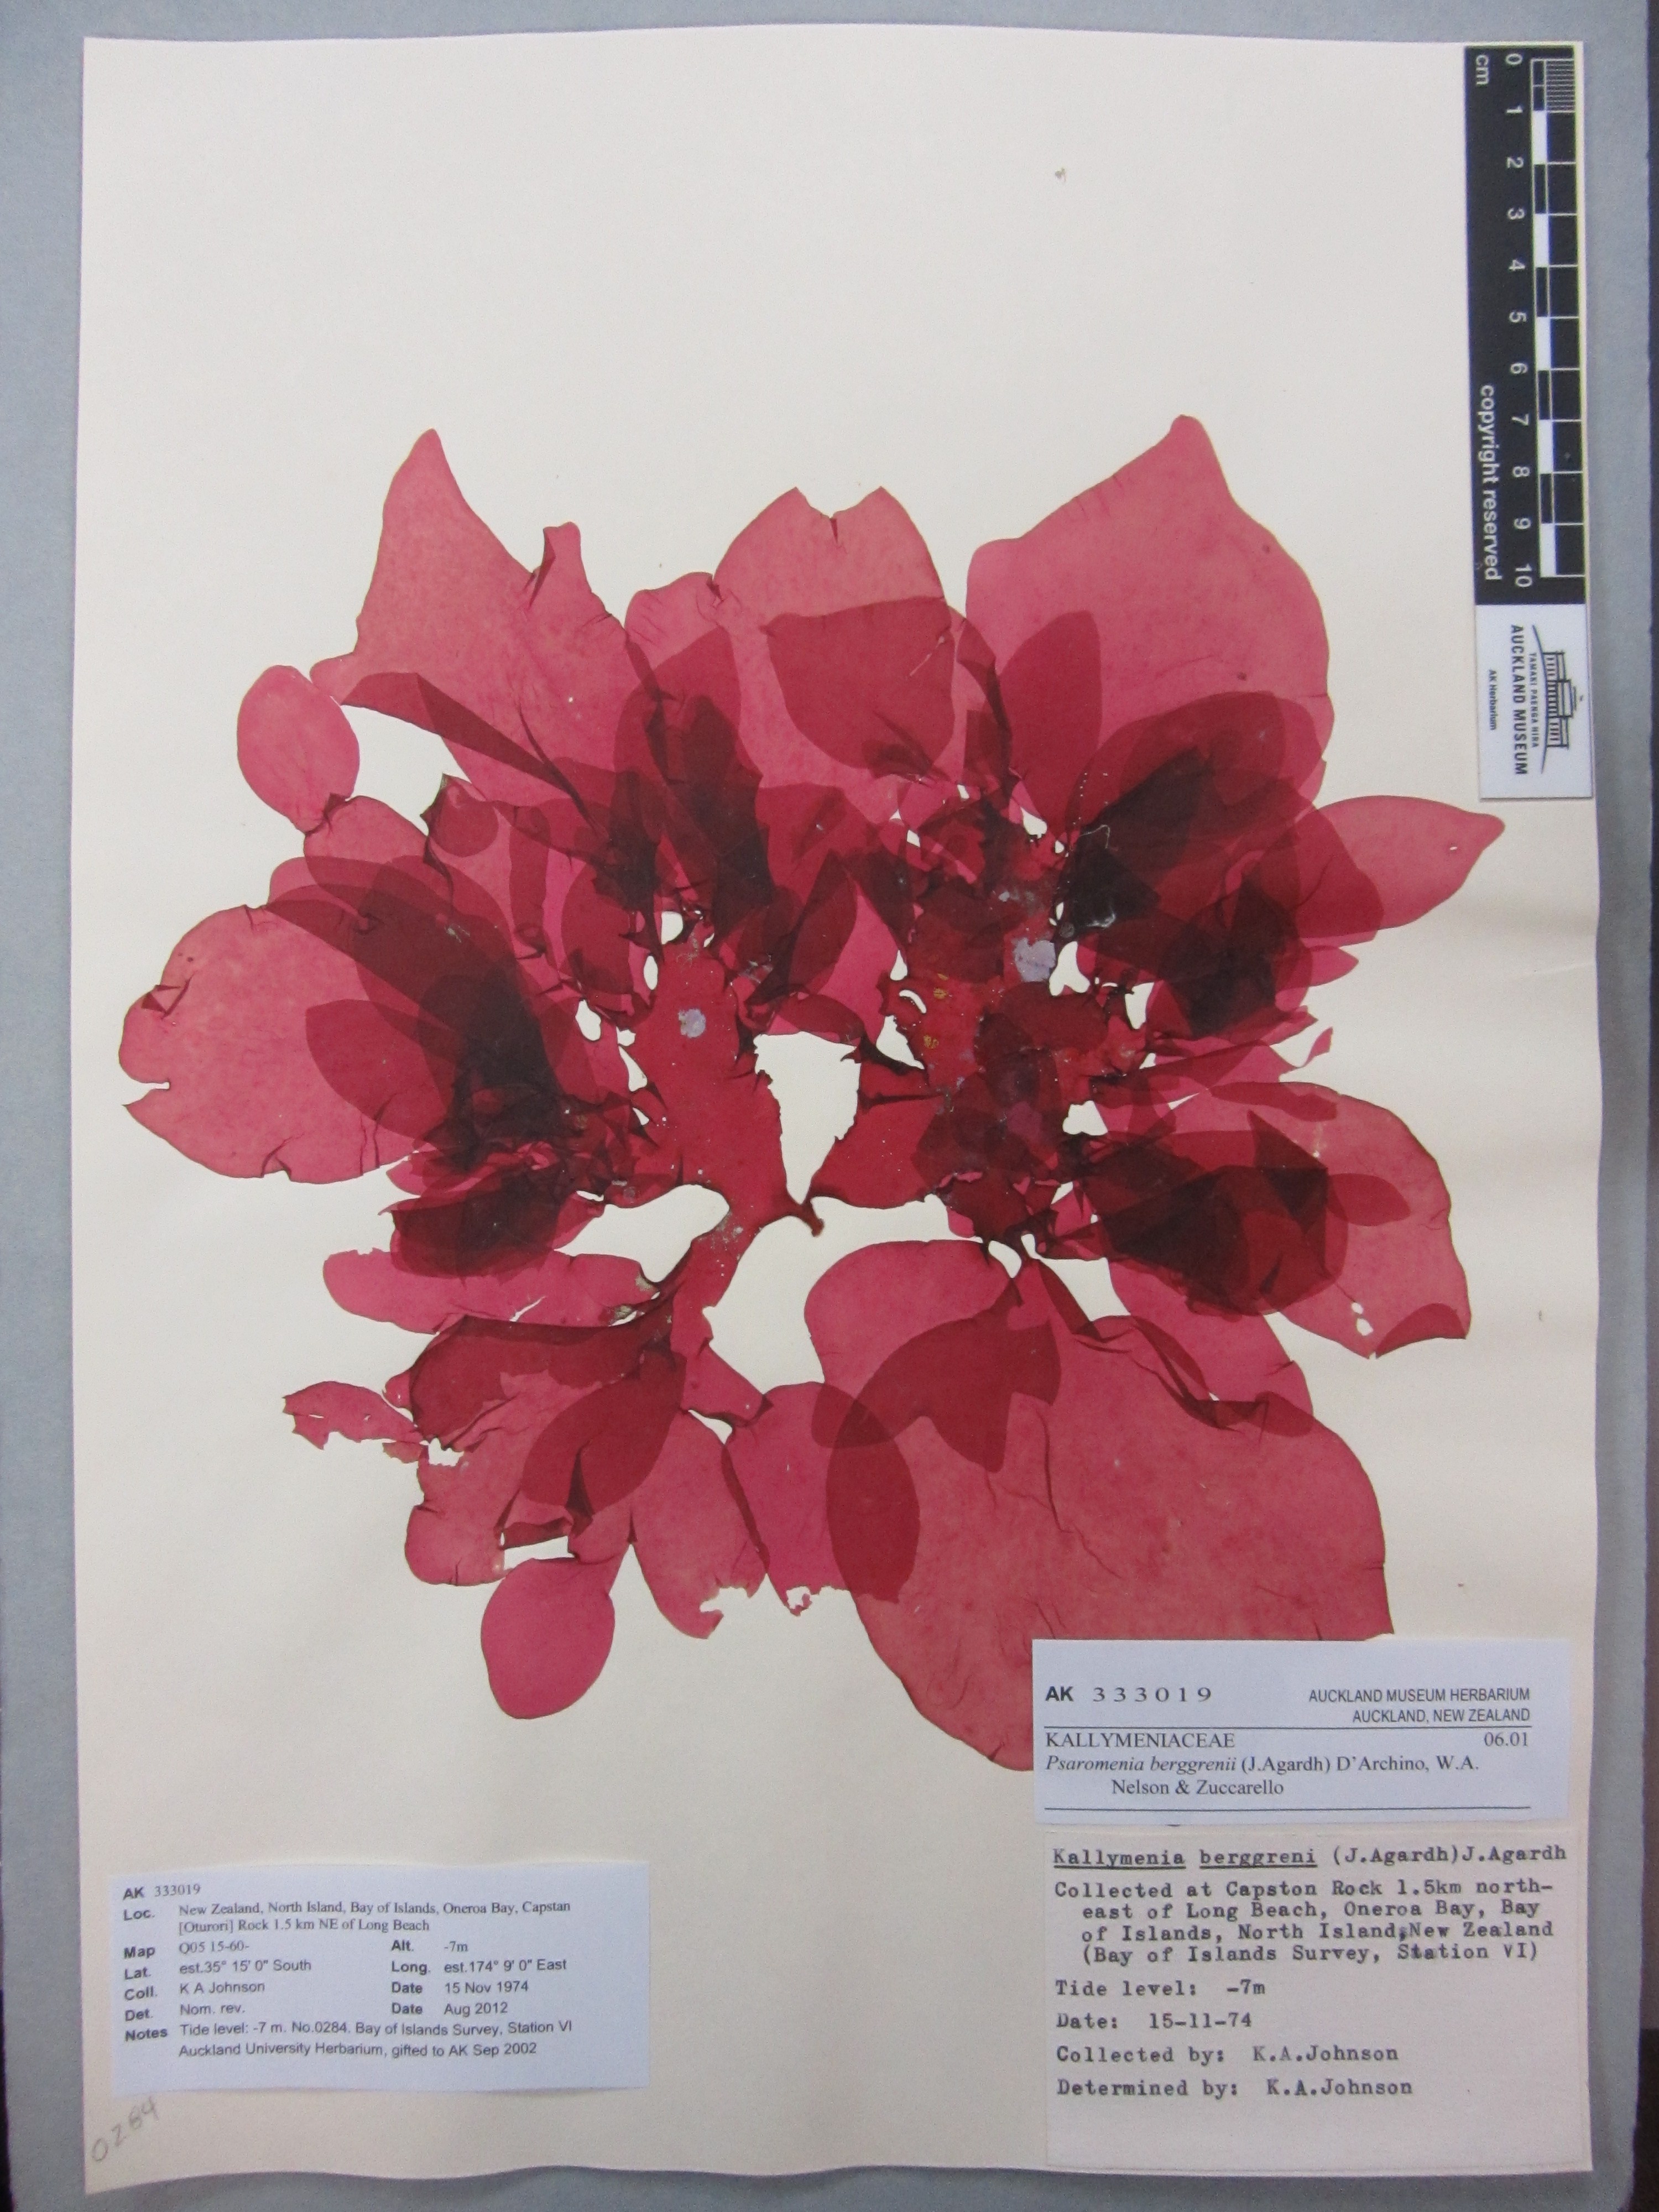 Psaromenia berggrenii (J.Agardh) D’Archino, W.A.Nelson and Zuccarello (AM AK333019)